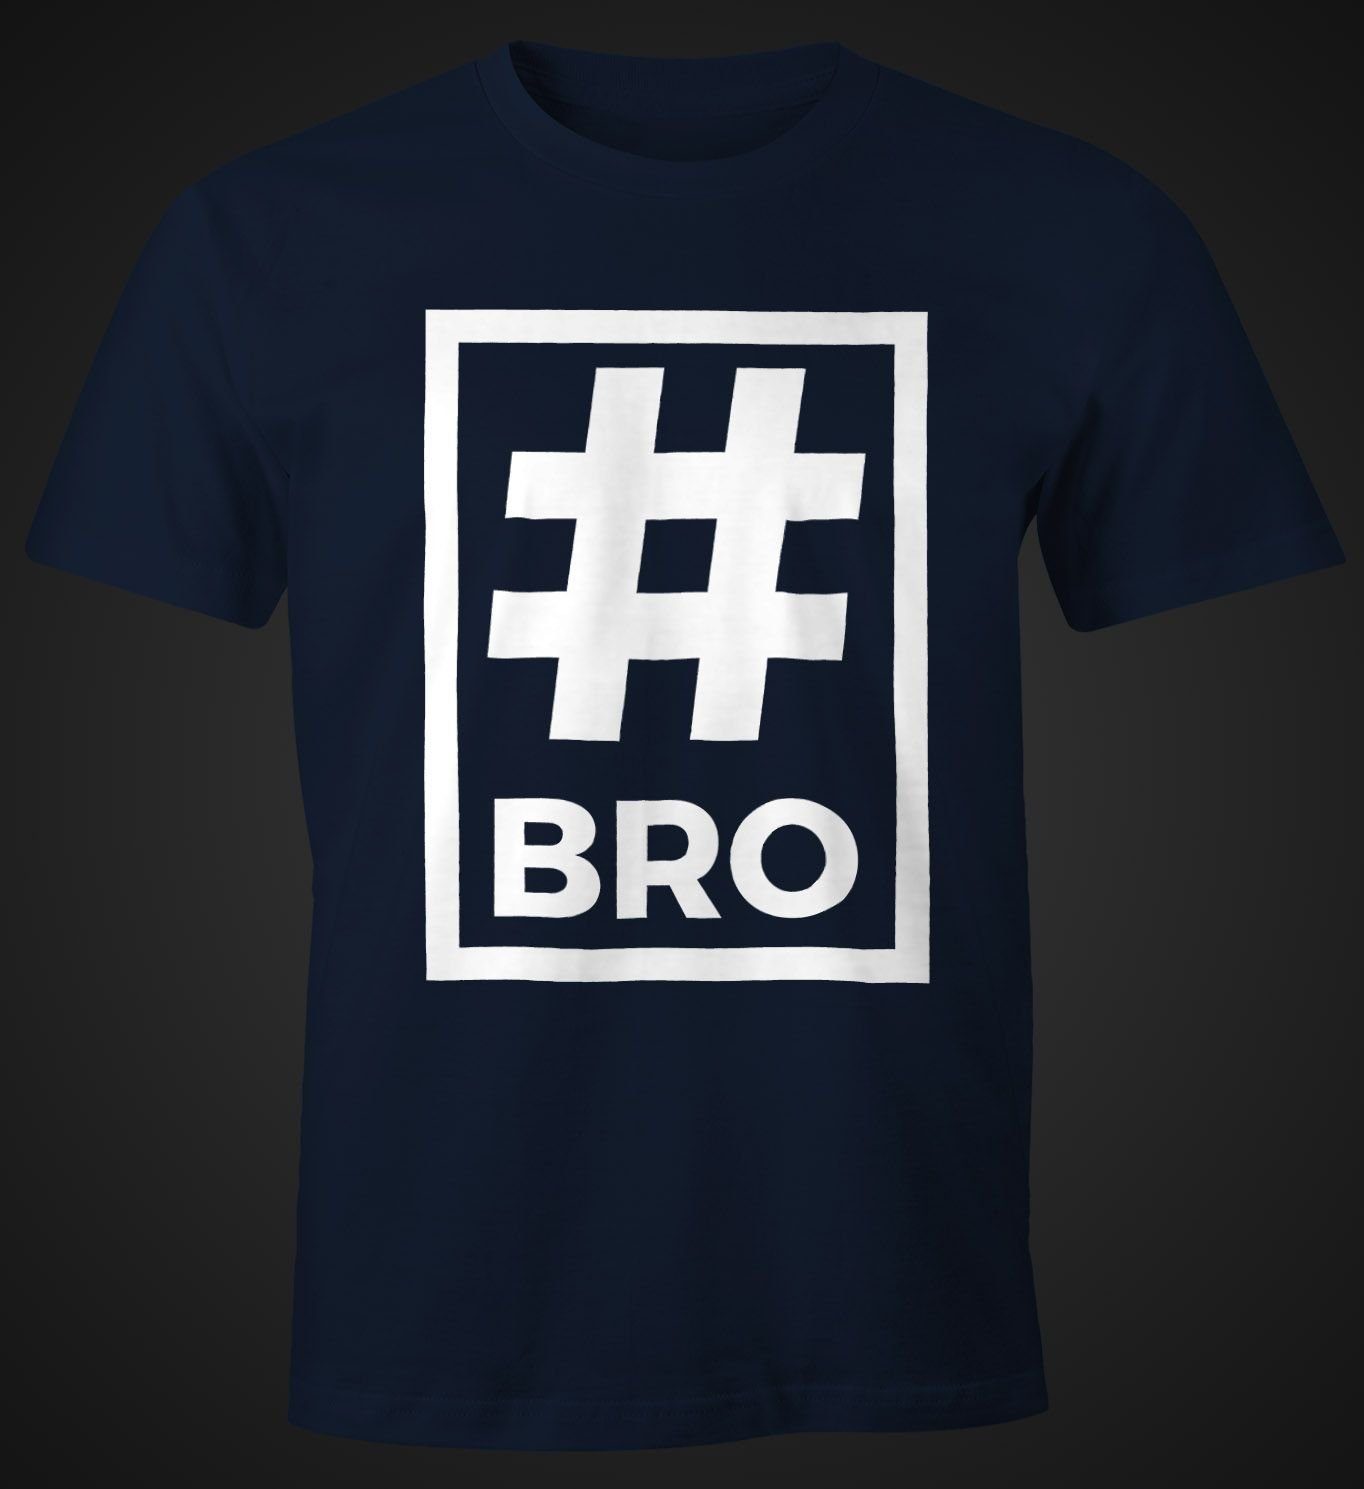 MoonWorks Print-Shirt Herren T-Shirt Brother Bro Hashtag mit Print Moonworks® navy